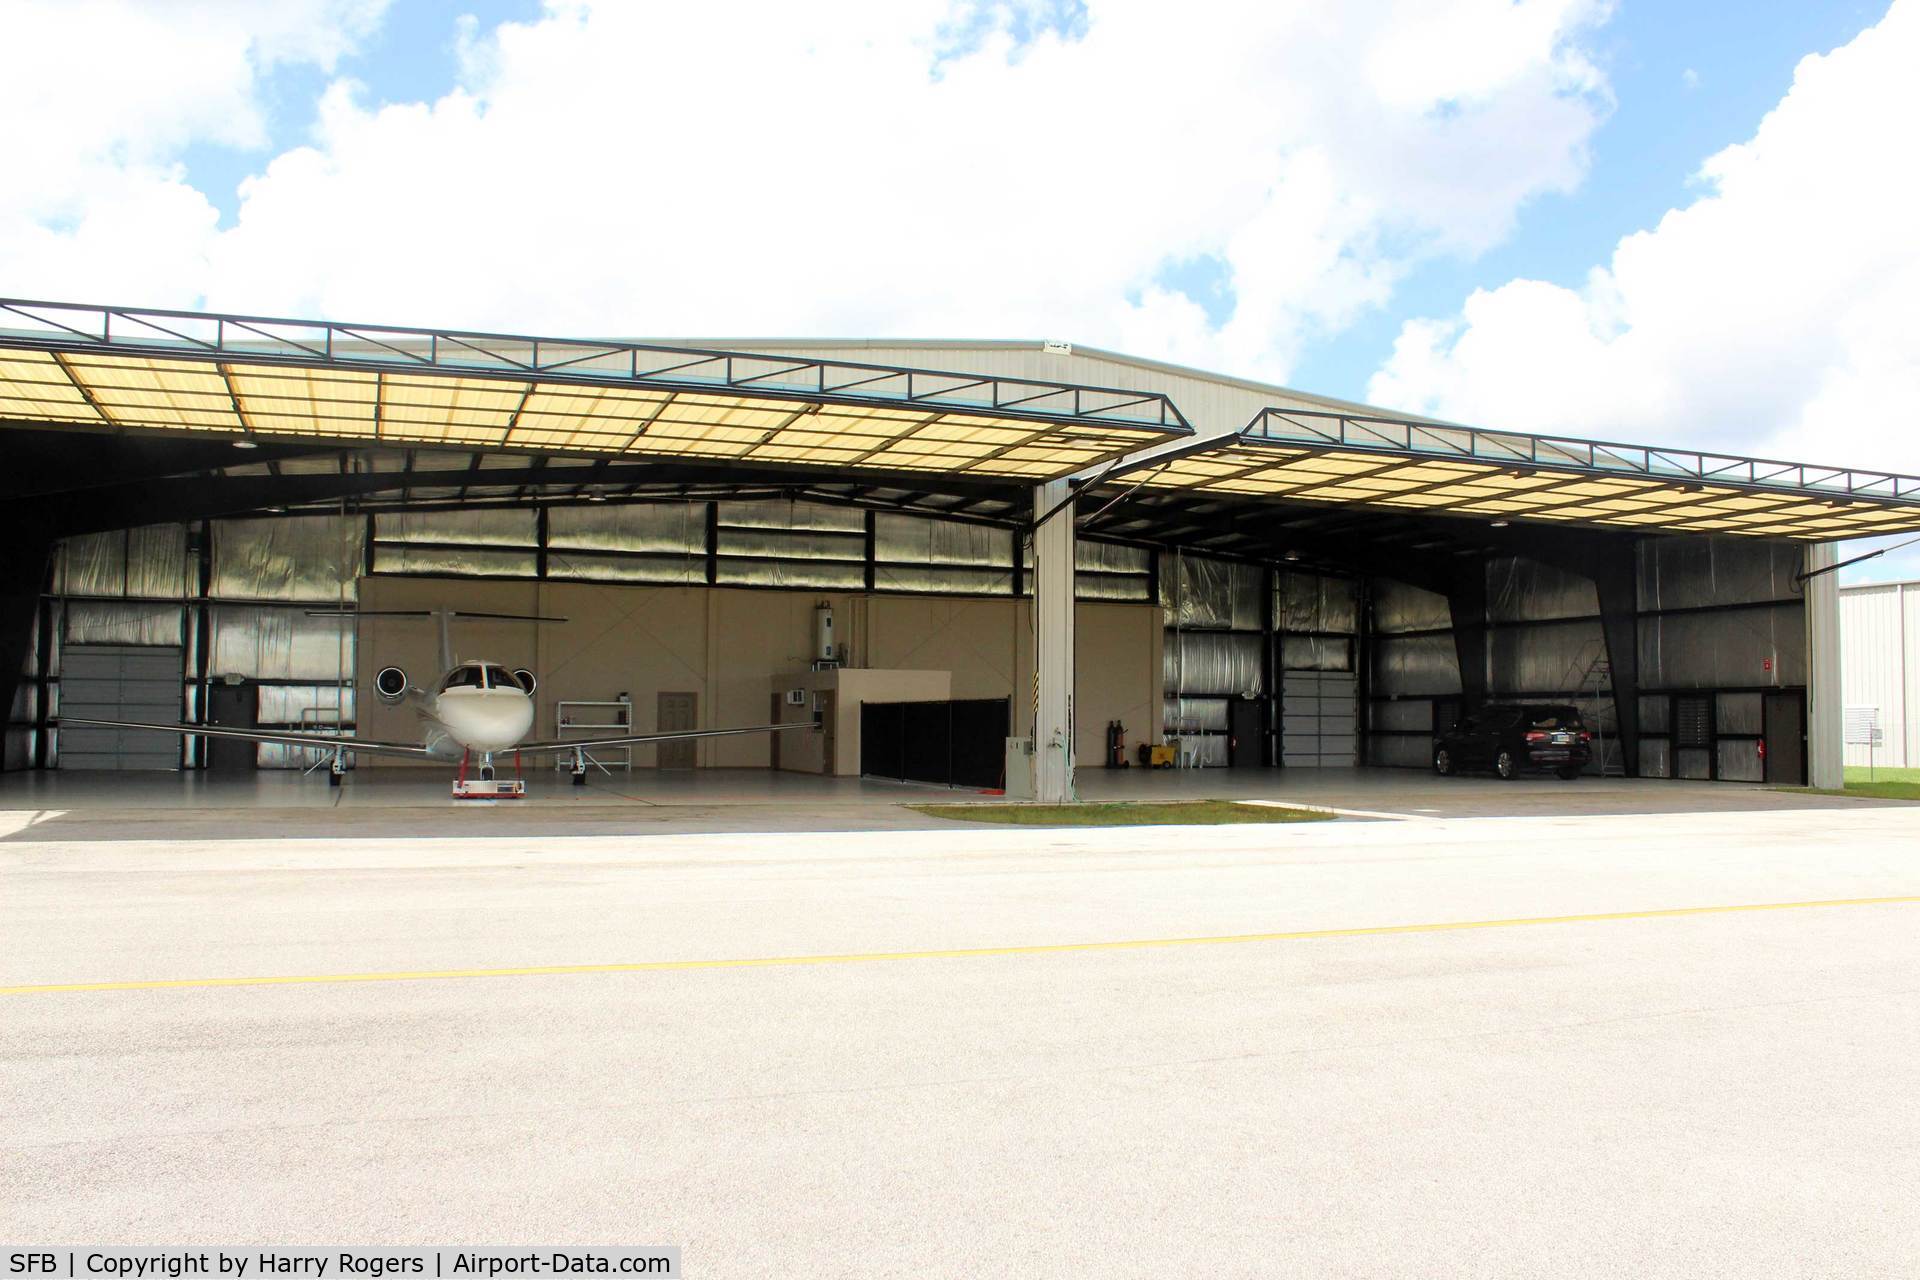 Orlando Sanford International Airport (SFB) - South East Ramp hangar facility.